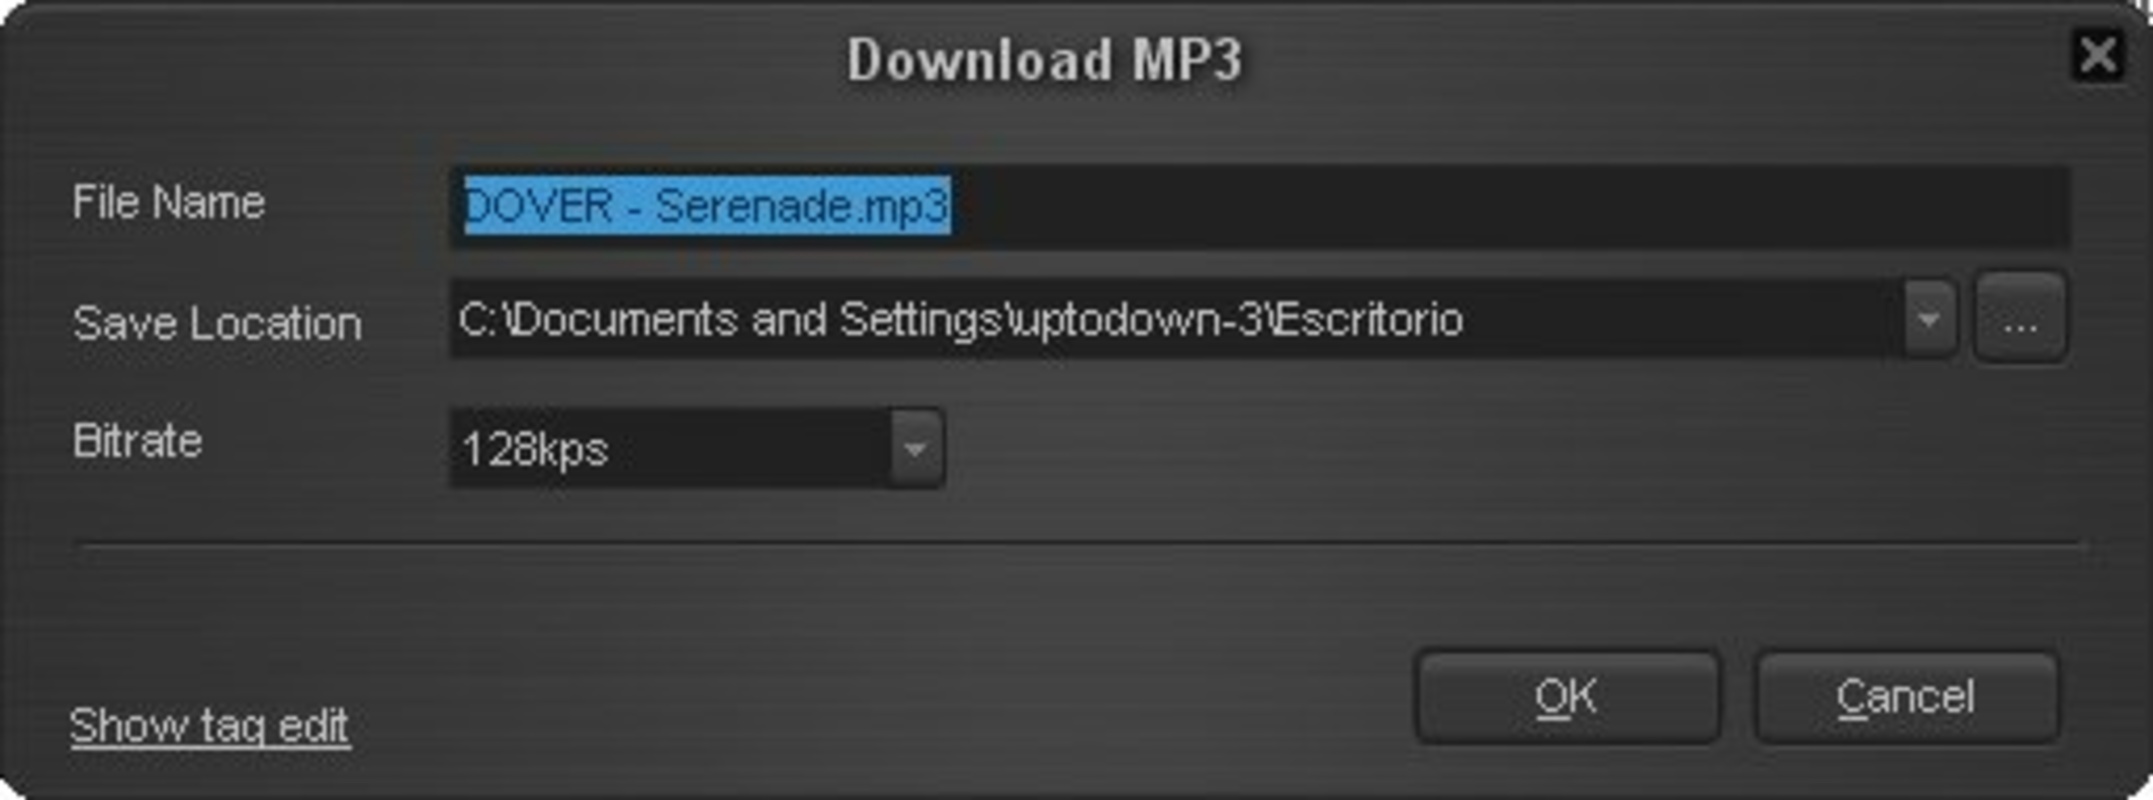 Hot MP3 Downloader 3.6.0.6 for Windows Screenshot 2